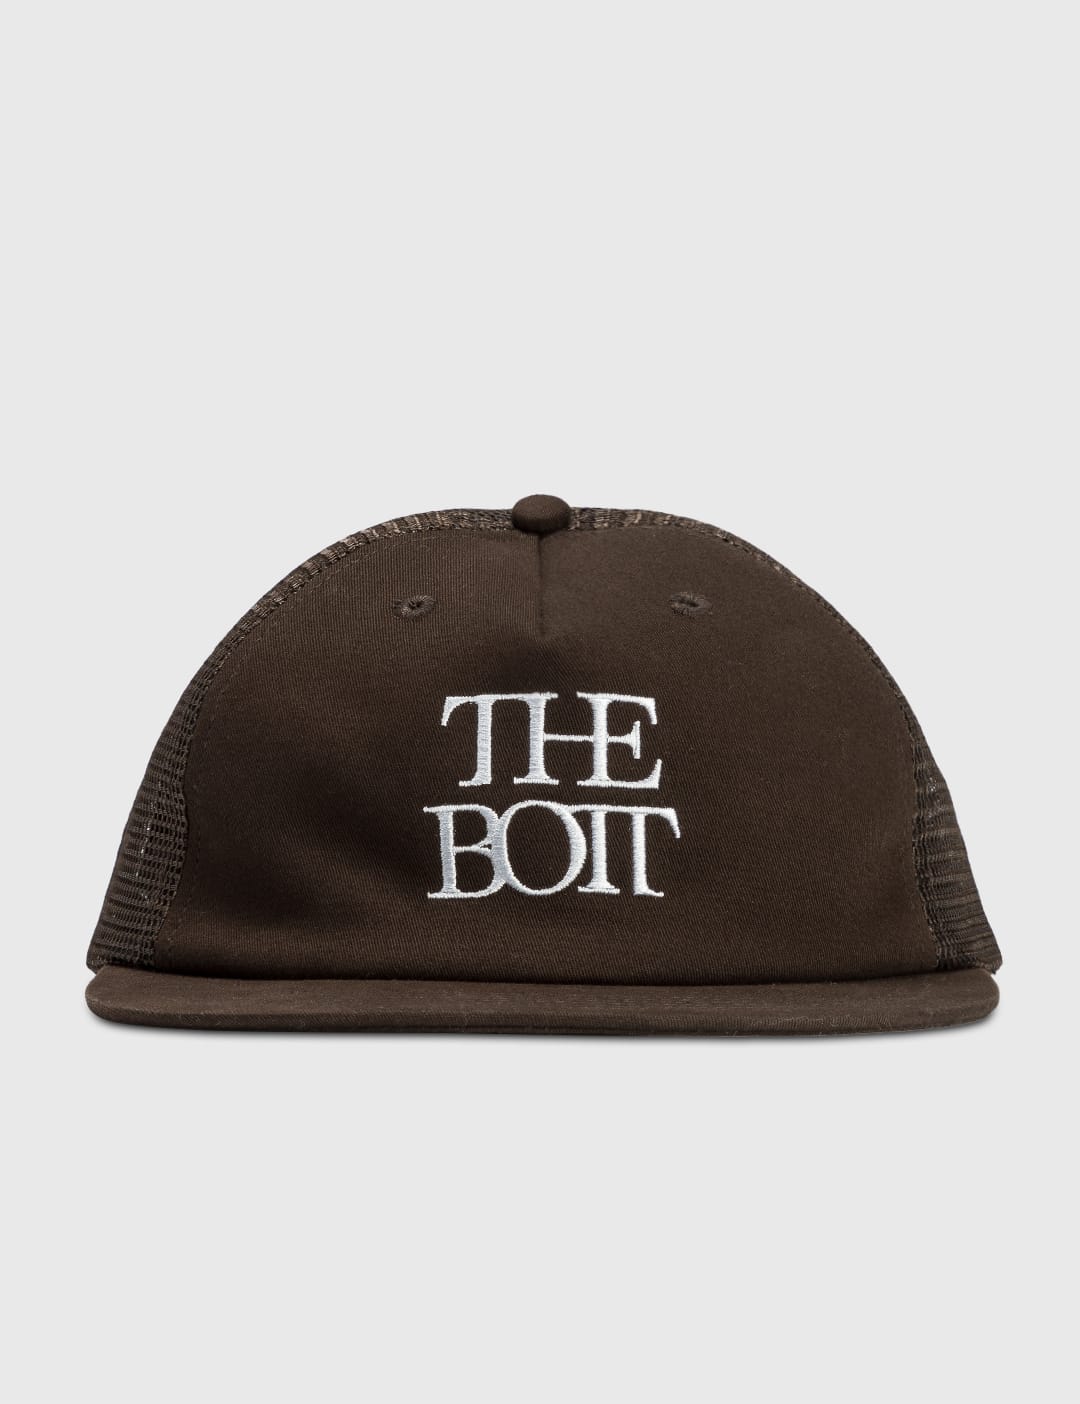 BoTT - The BoTT メッシュキャップ | HBX - ハイプビースト(Hypebeast